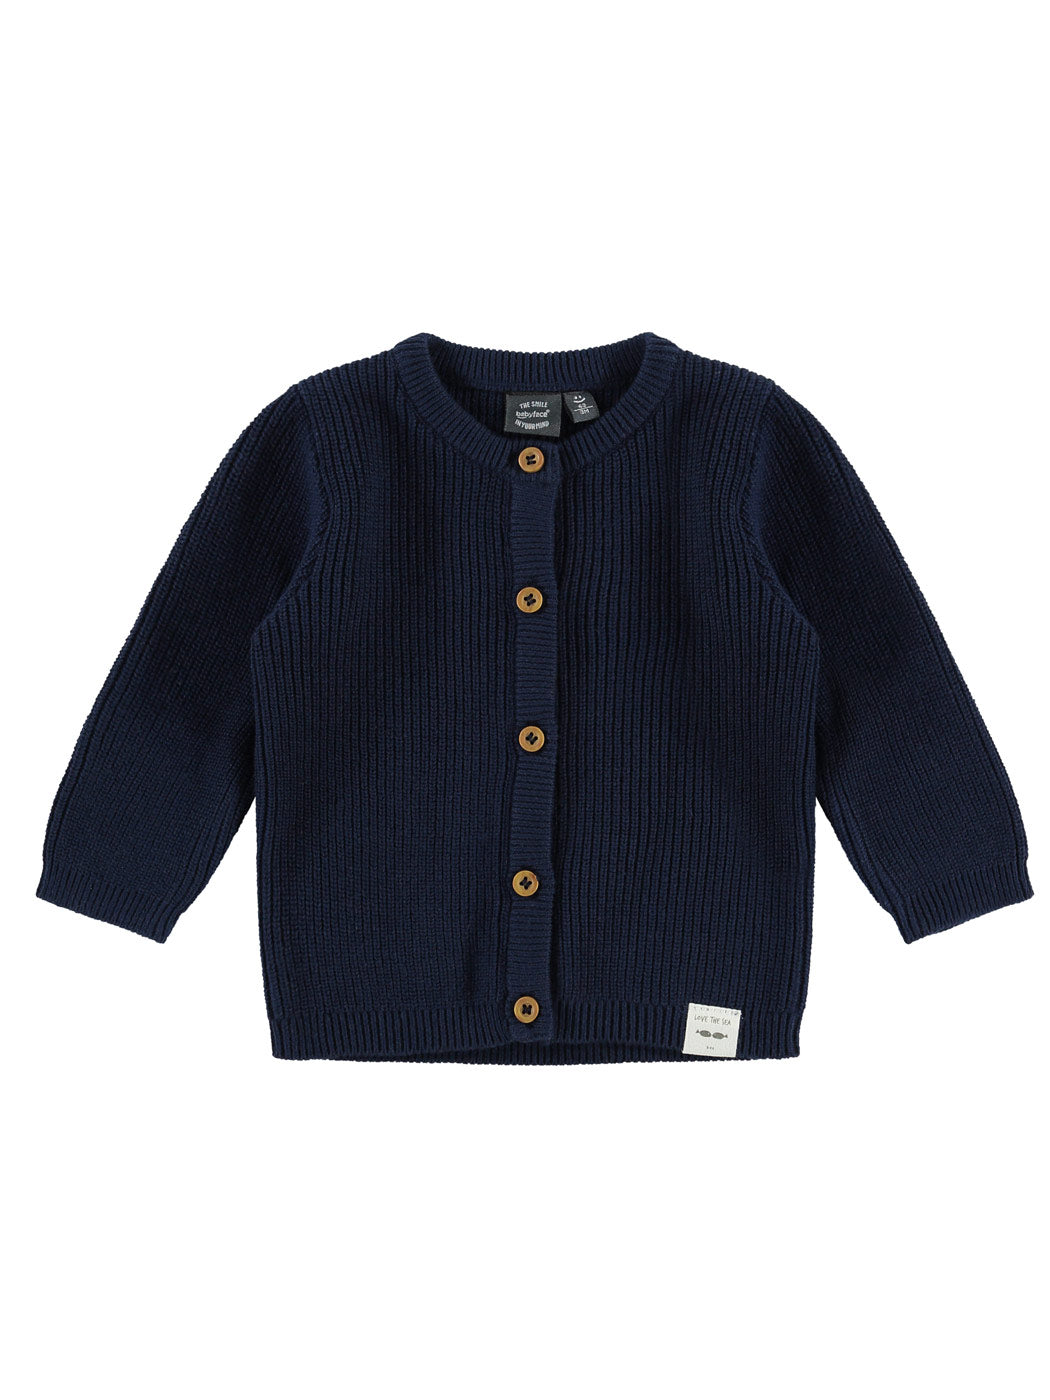 Knitted Baby Cardigan - NWB23329340 Blue